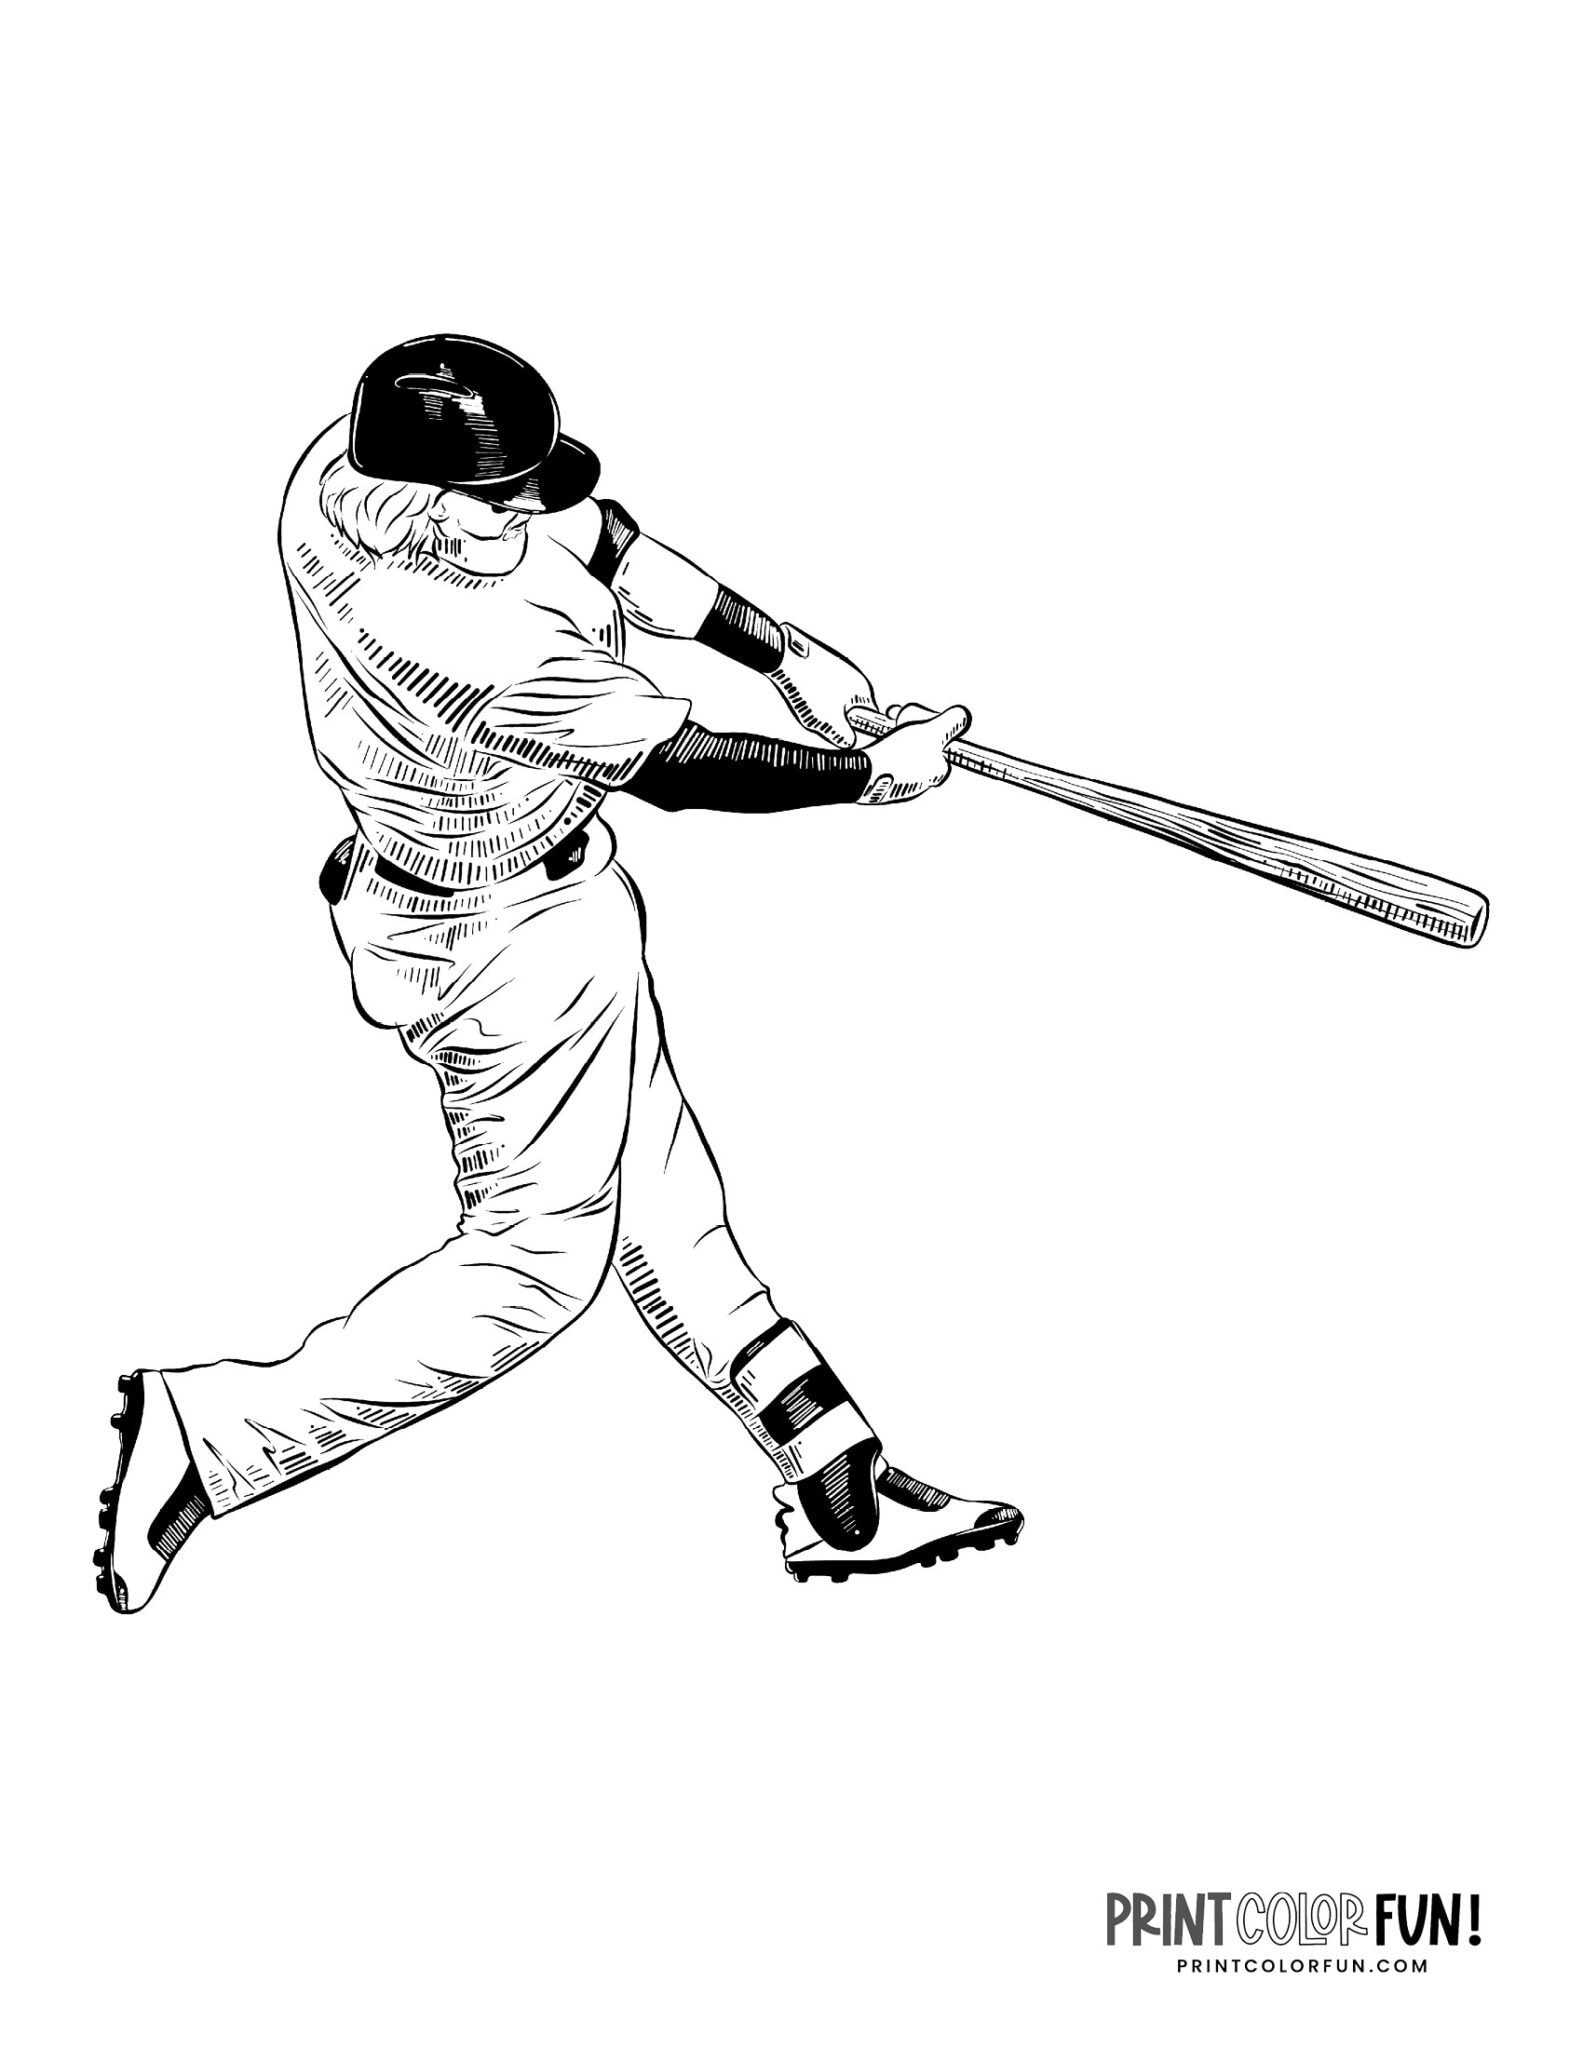 Free Printable Baseball Coloring Pages